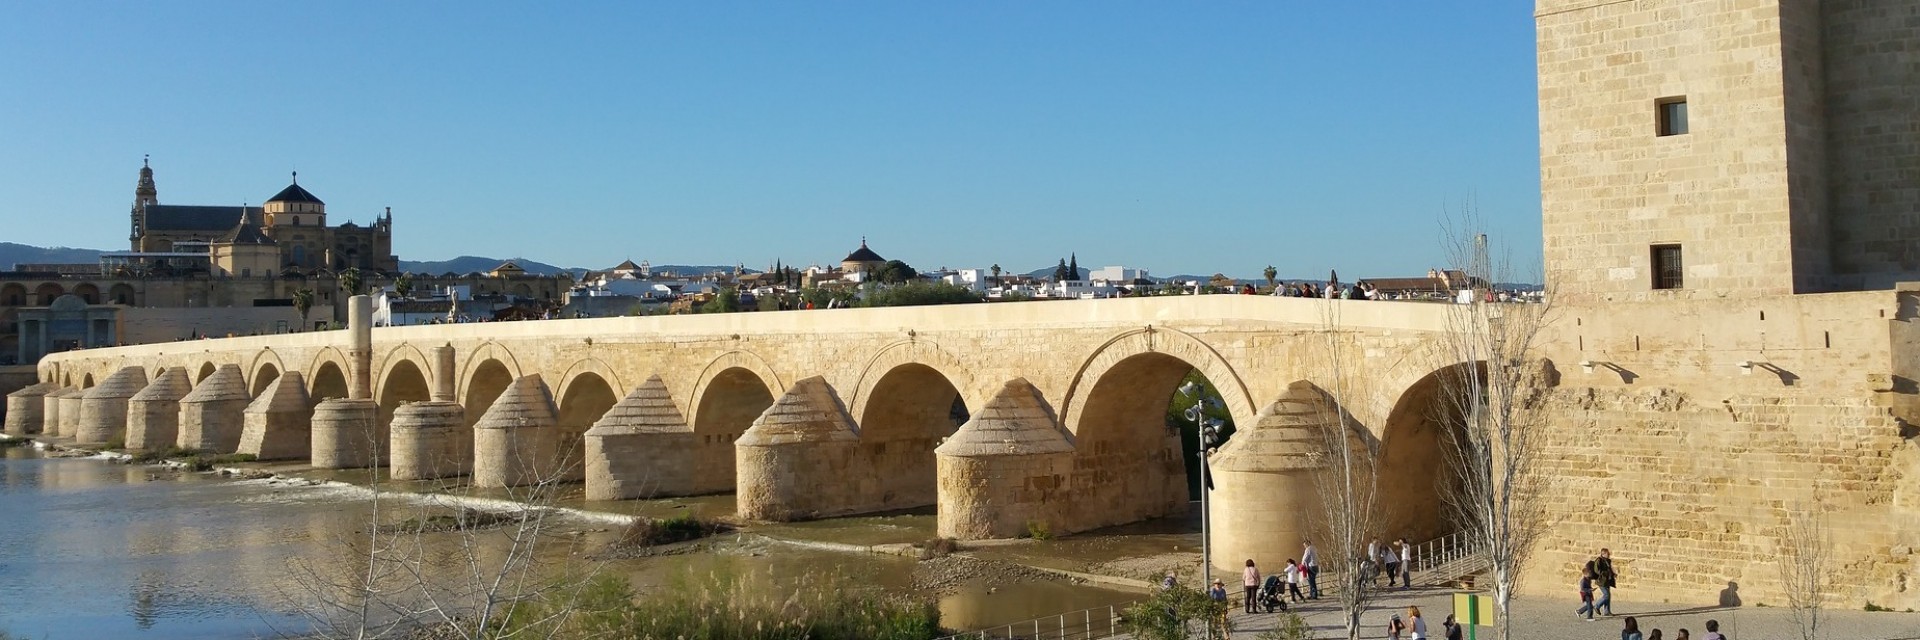 Roman bridge Cordoba